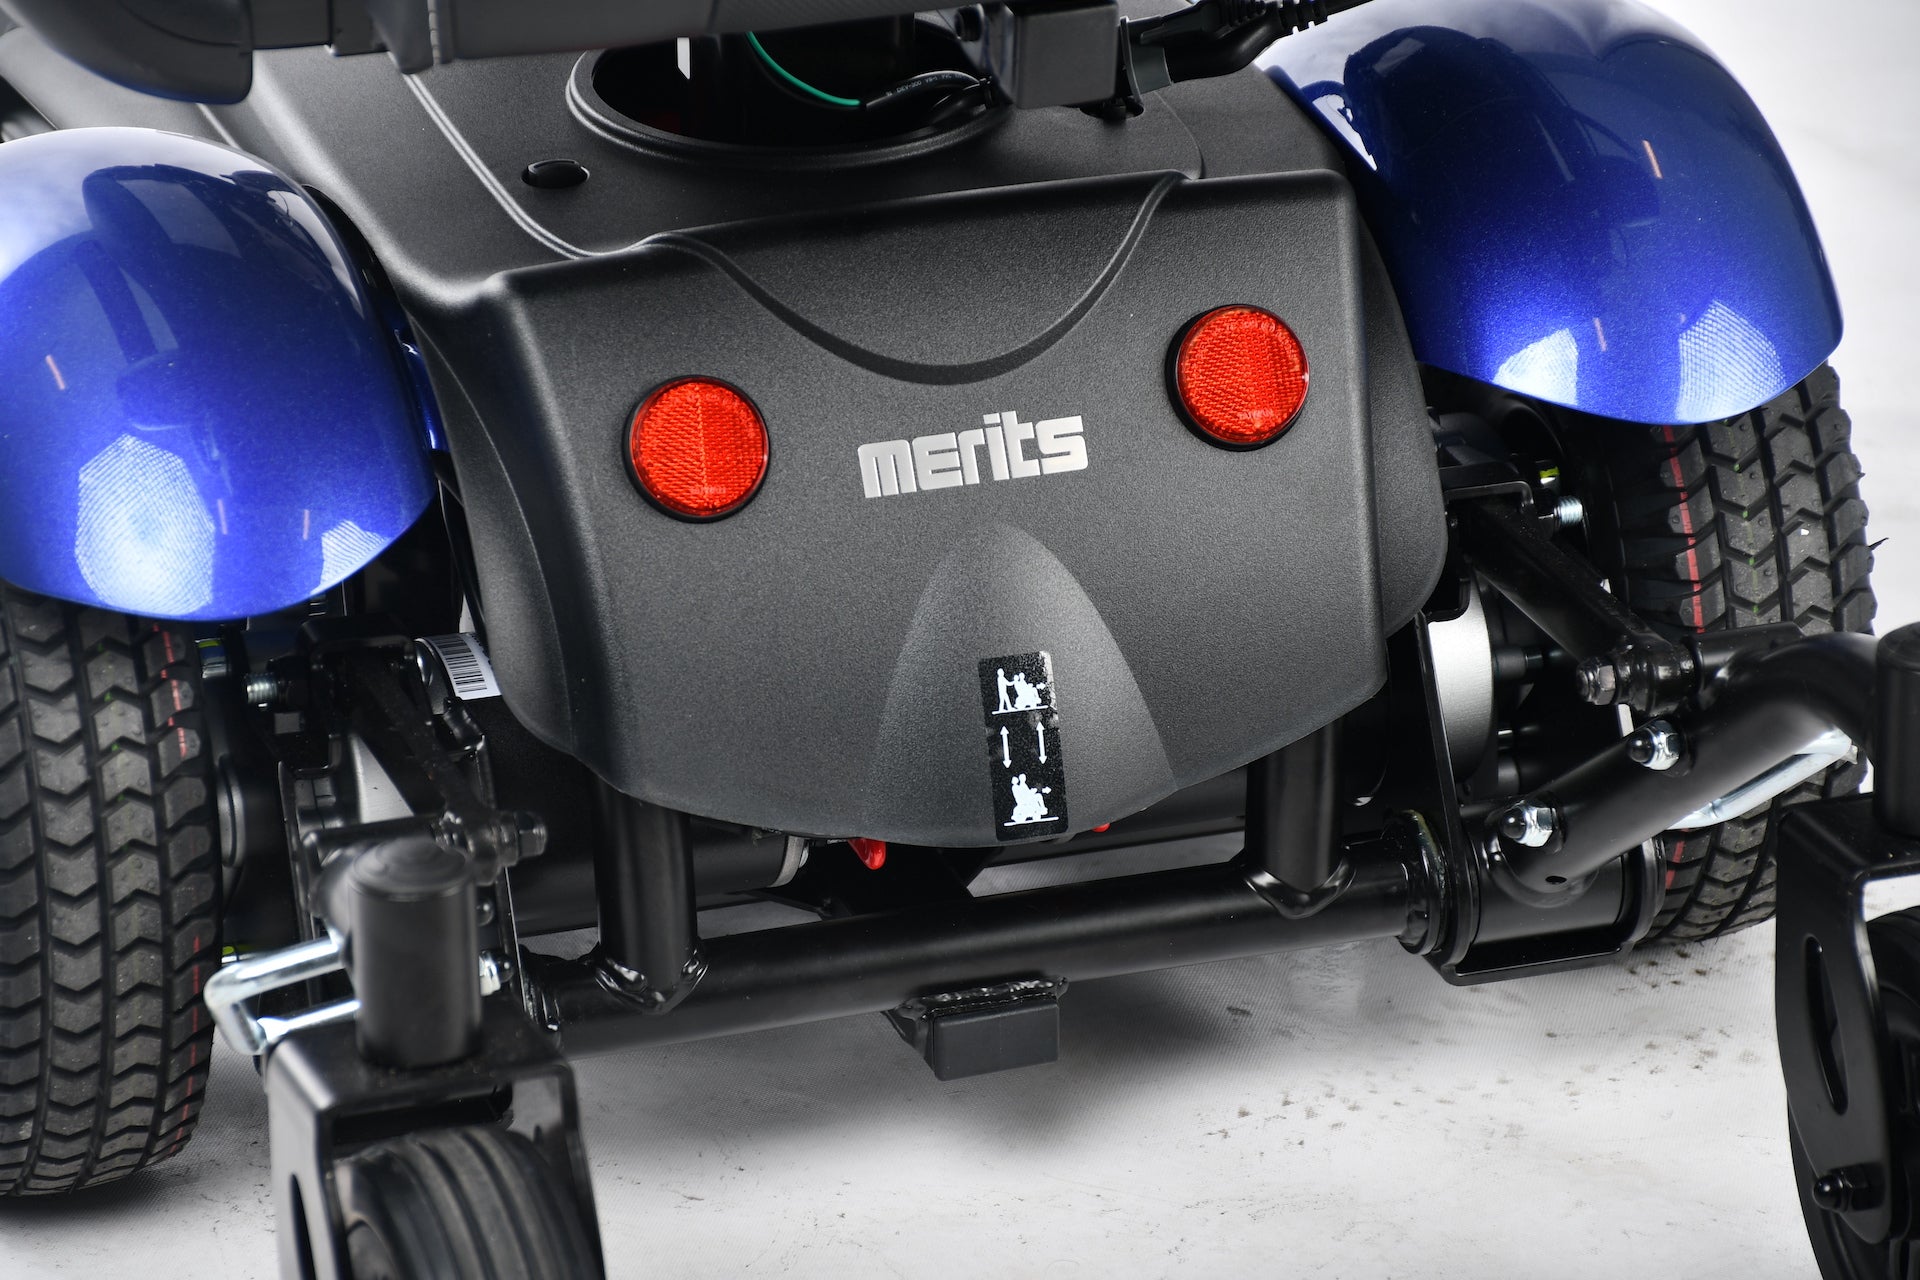 Merits Health Vision Sport Lift P326D Electric Wheelchair